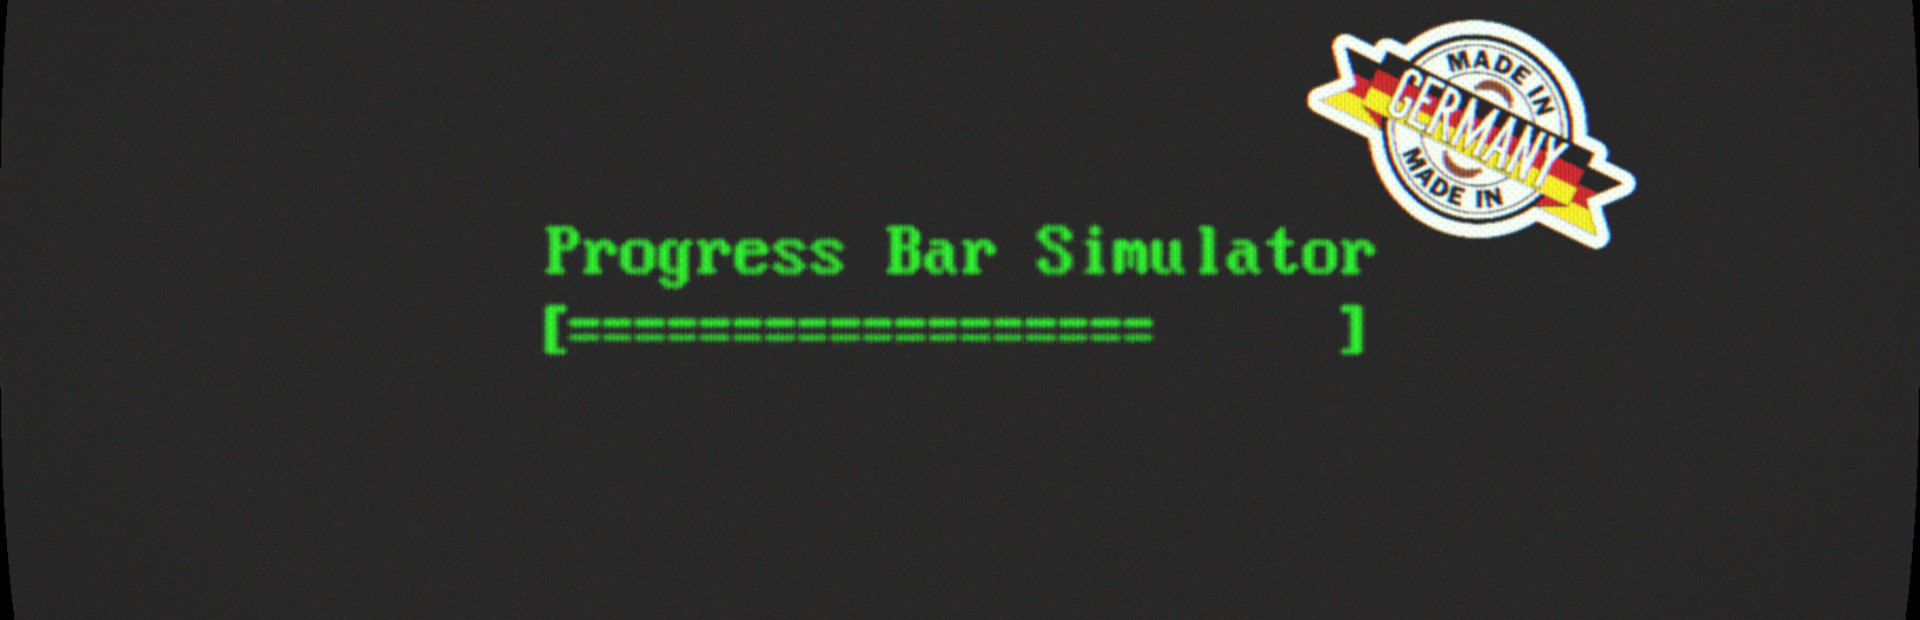 Progress Bar Simulator cover image